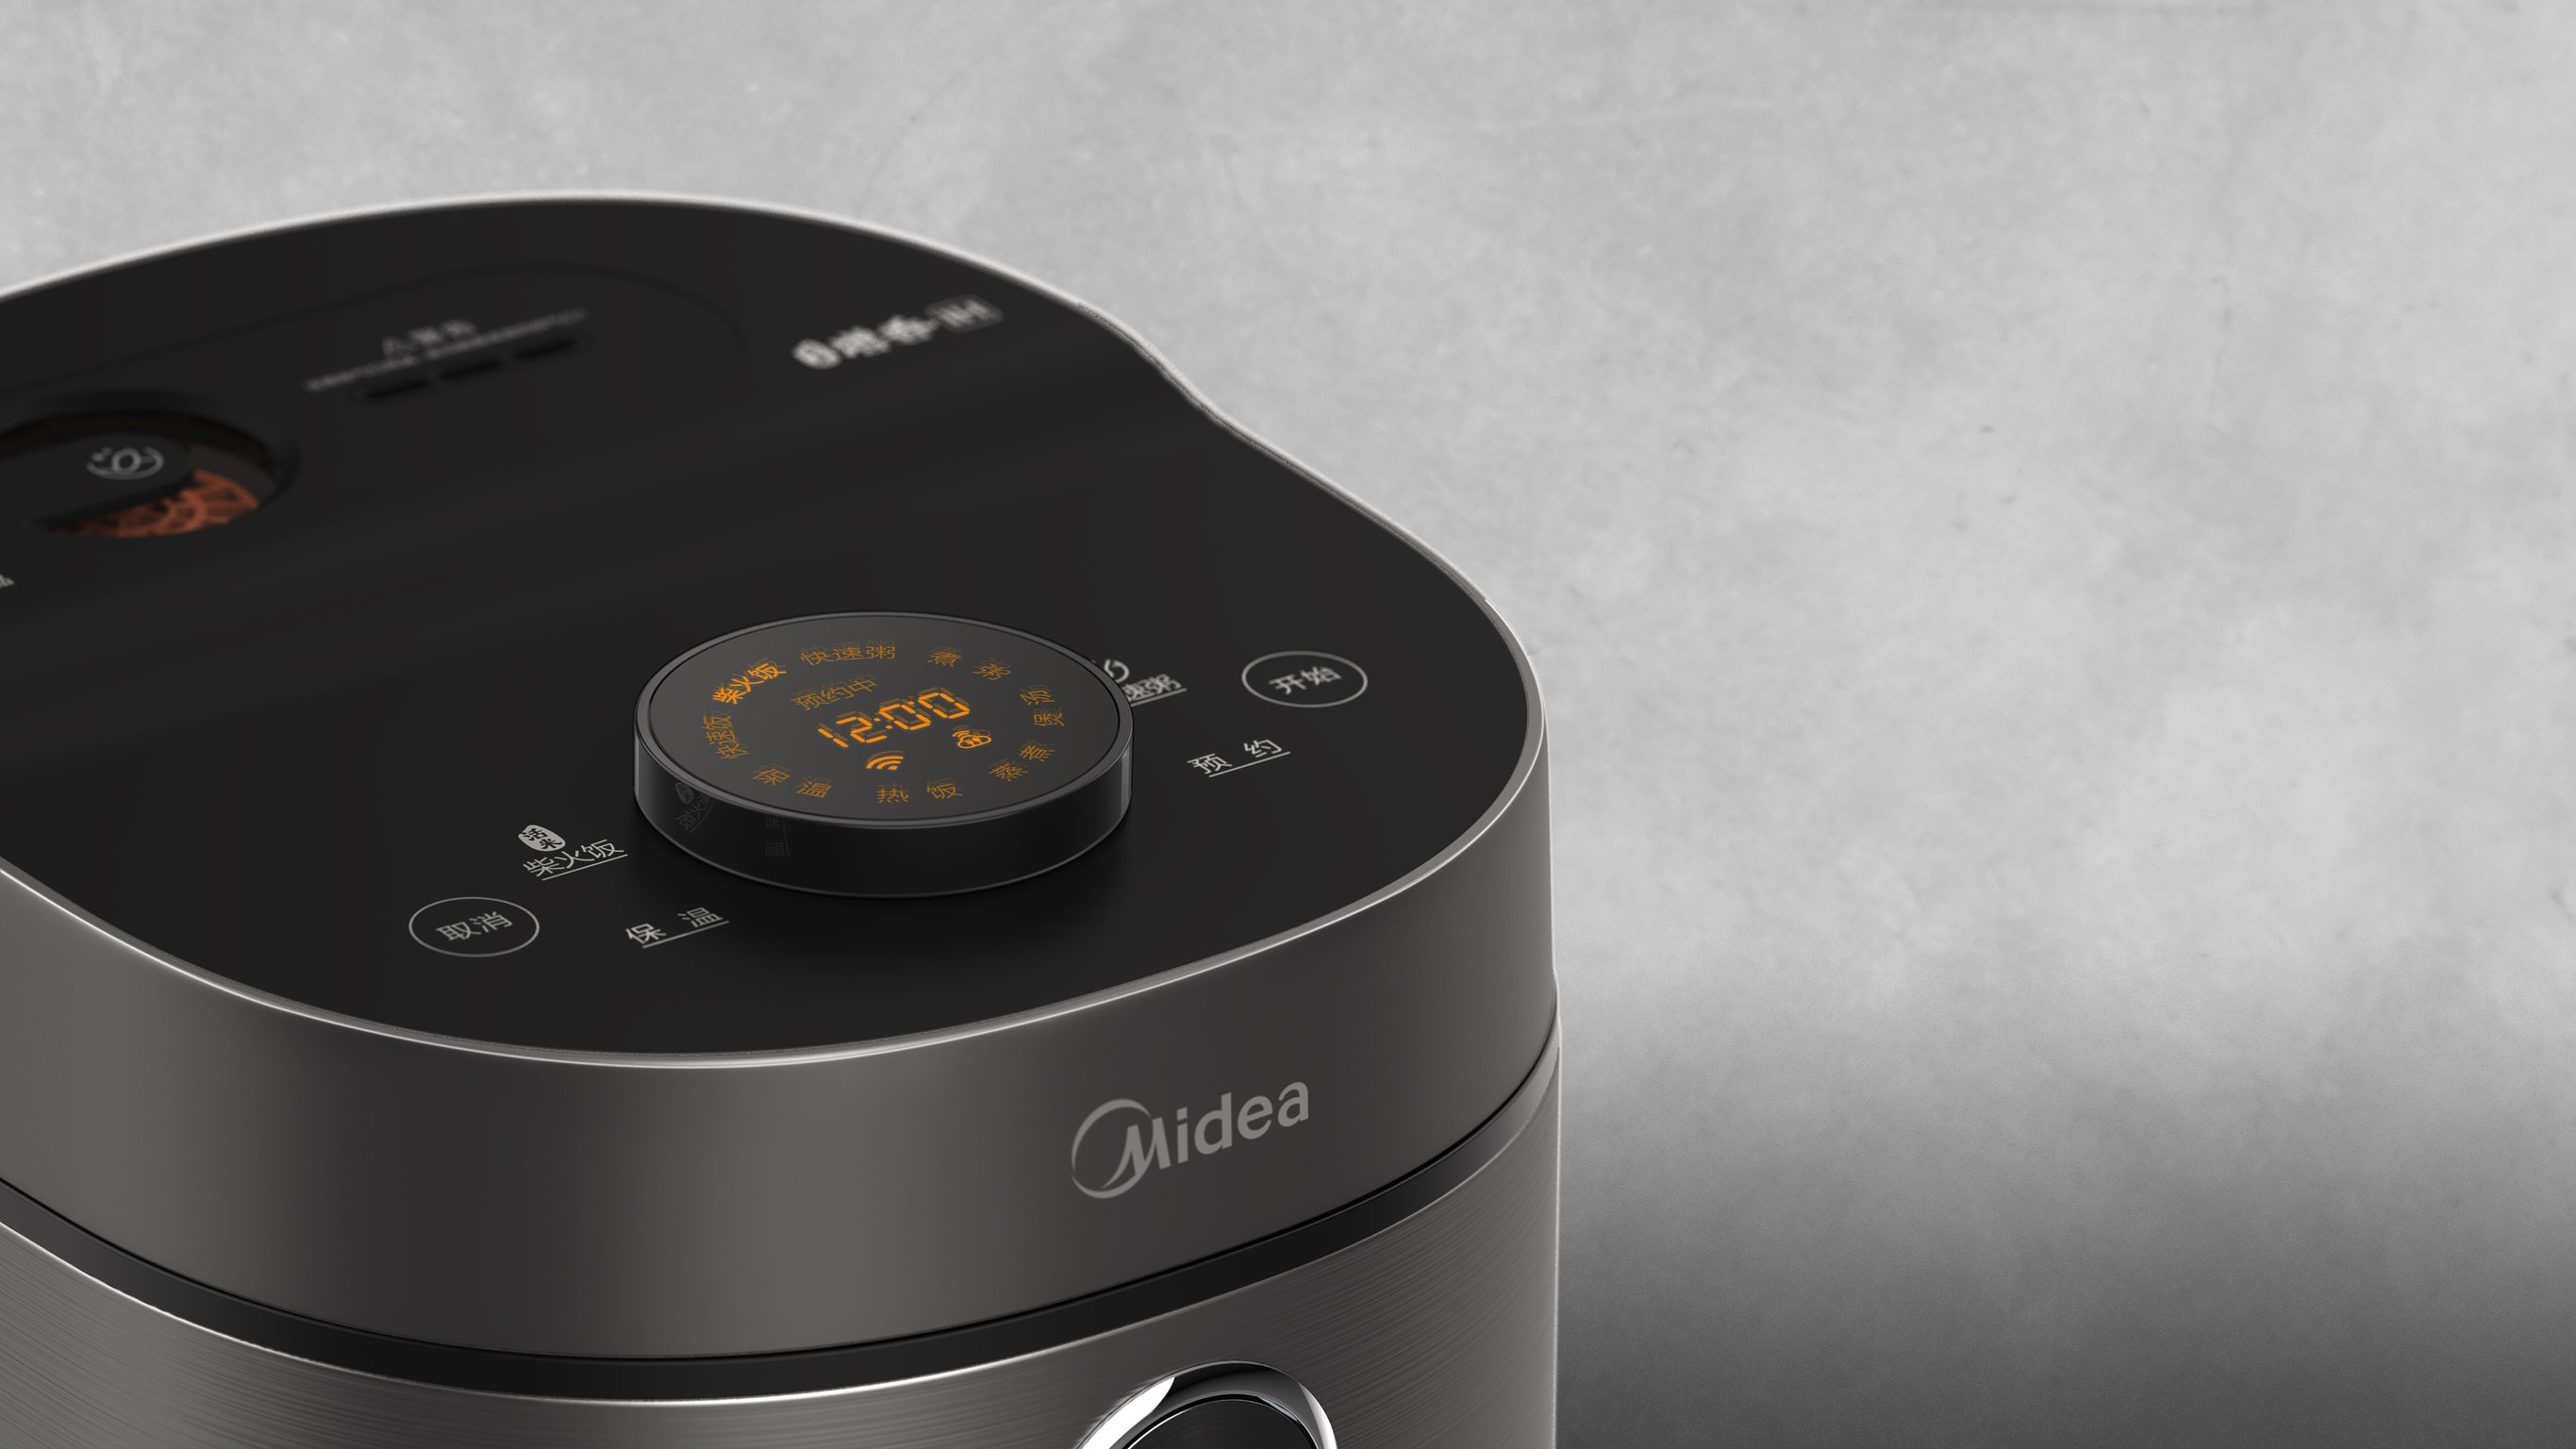 iF Design - Midea FB40X9 rice cooker series